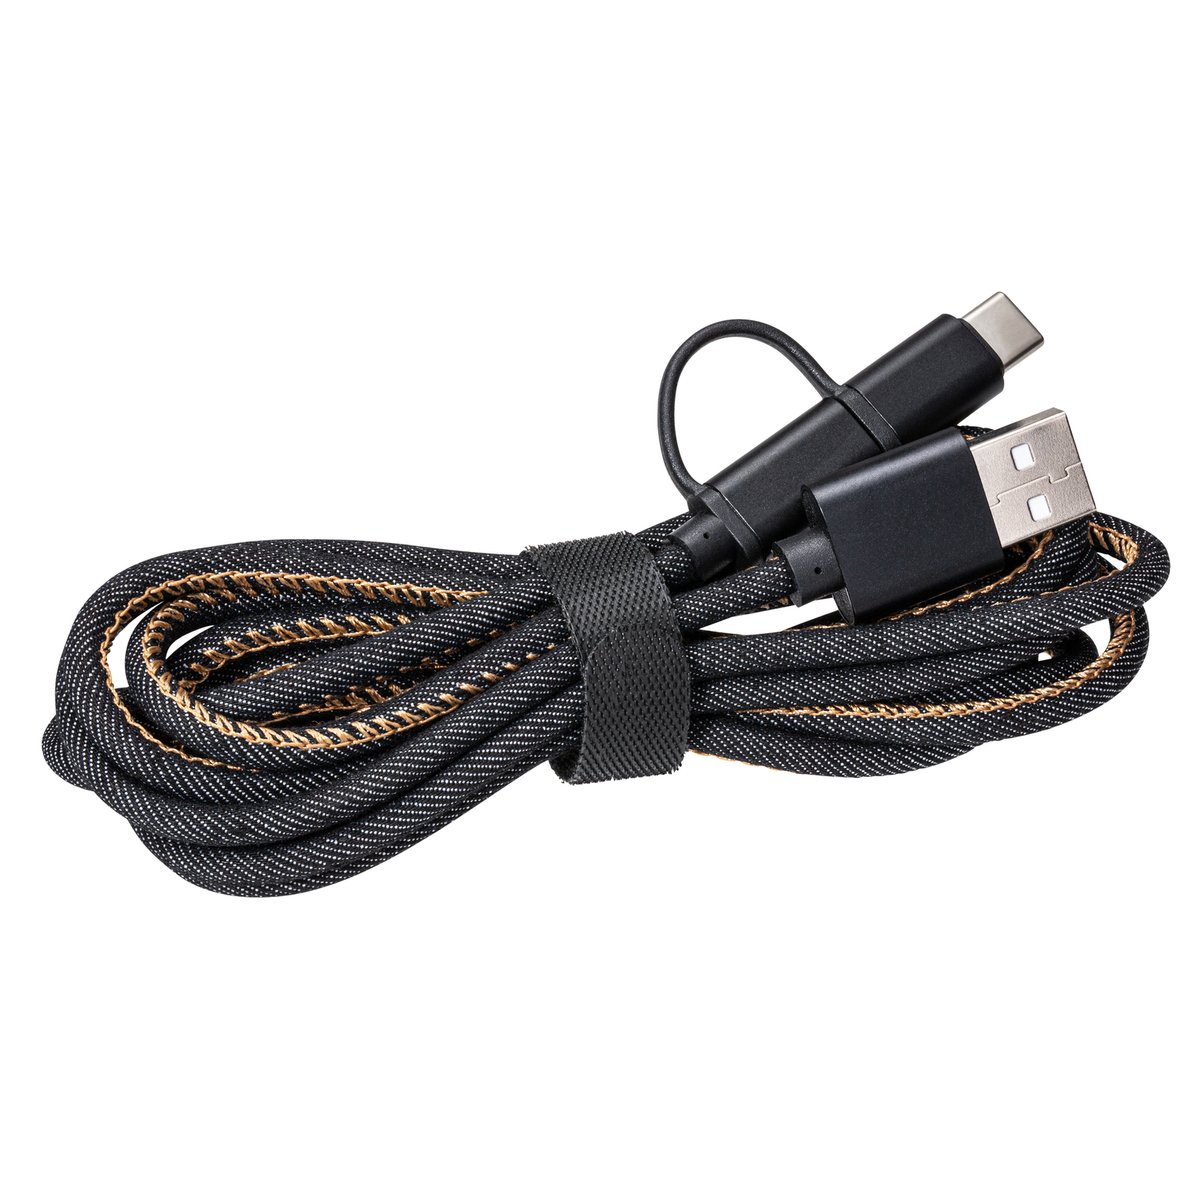 3-in-1 Charging Cable REEVES-DENIM black